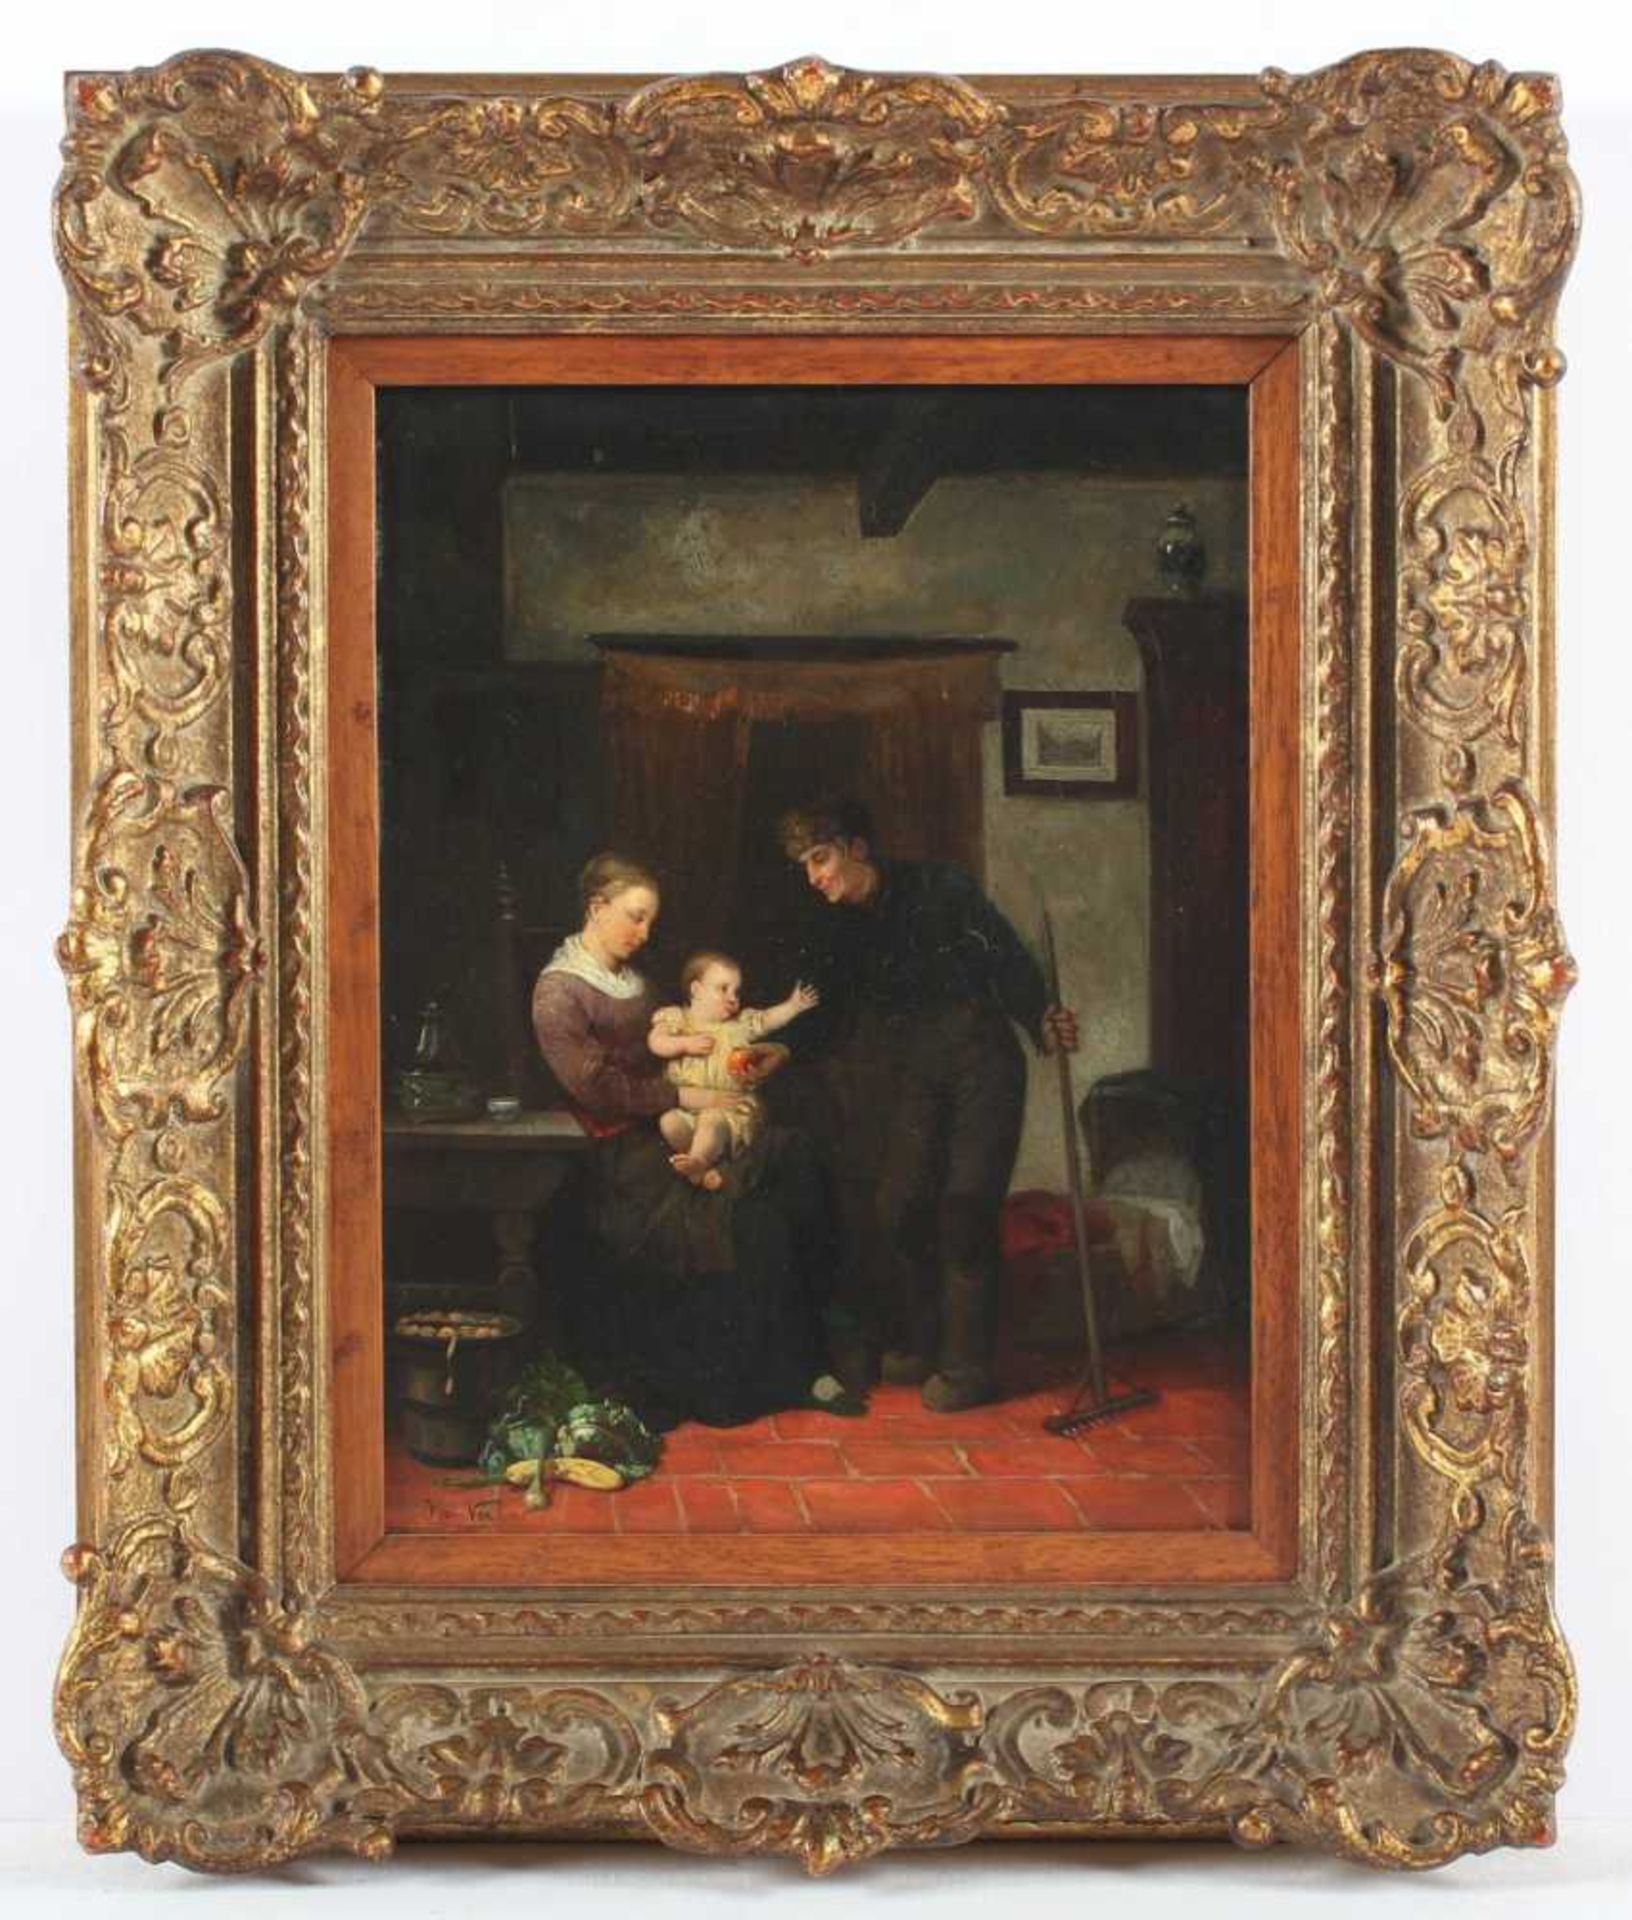 VERHAS, Jan (1834-1896), "Interieur mit Familie", Öl/Holz, 26 x 21, unten links signiert, R. - Image 2 of 4